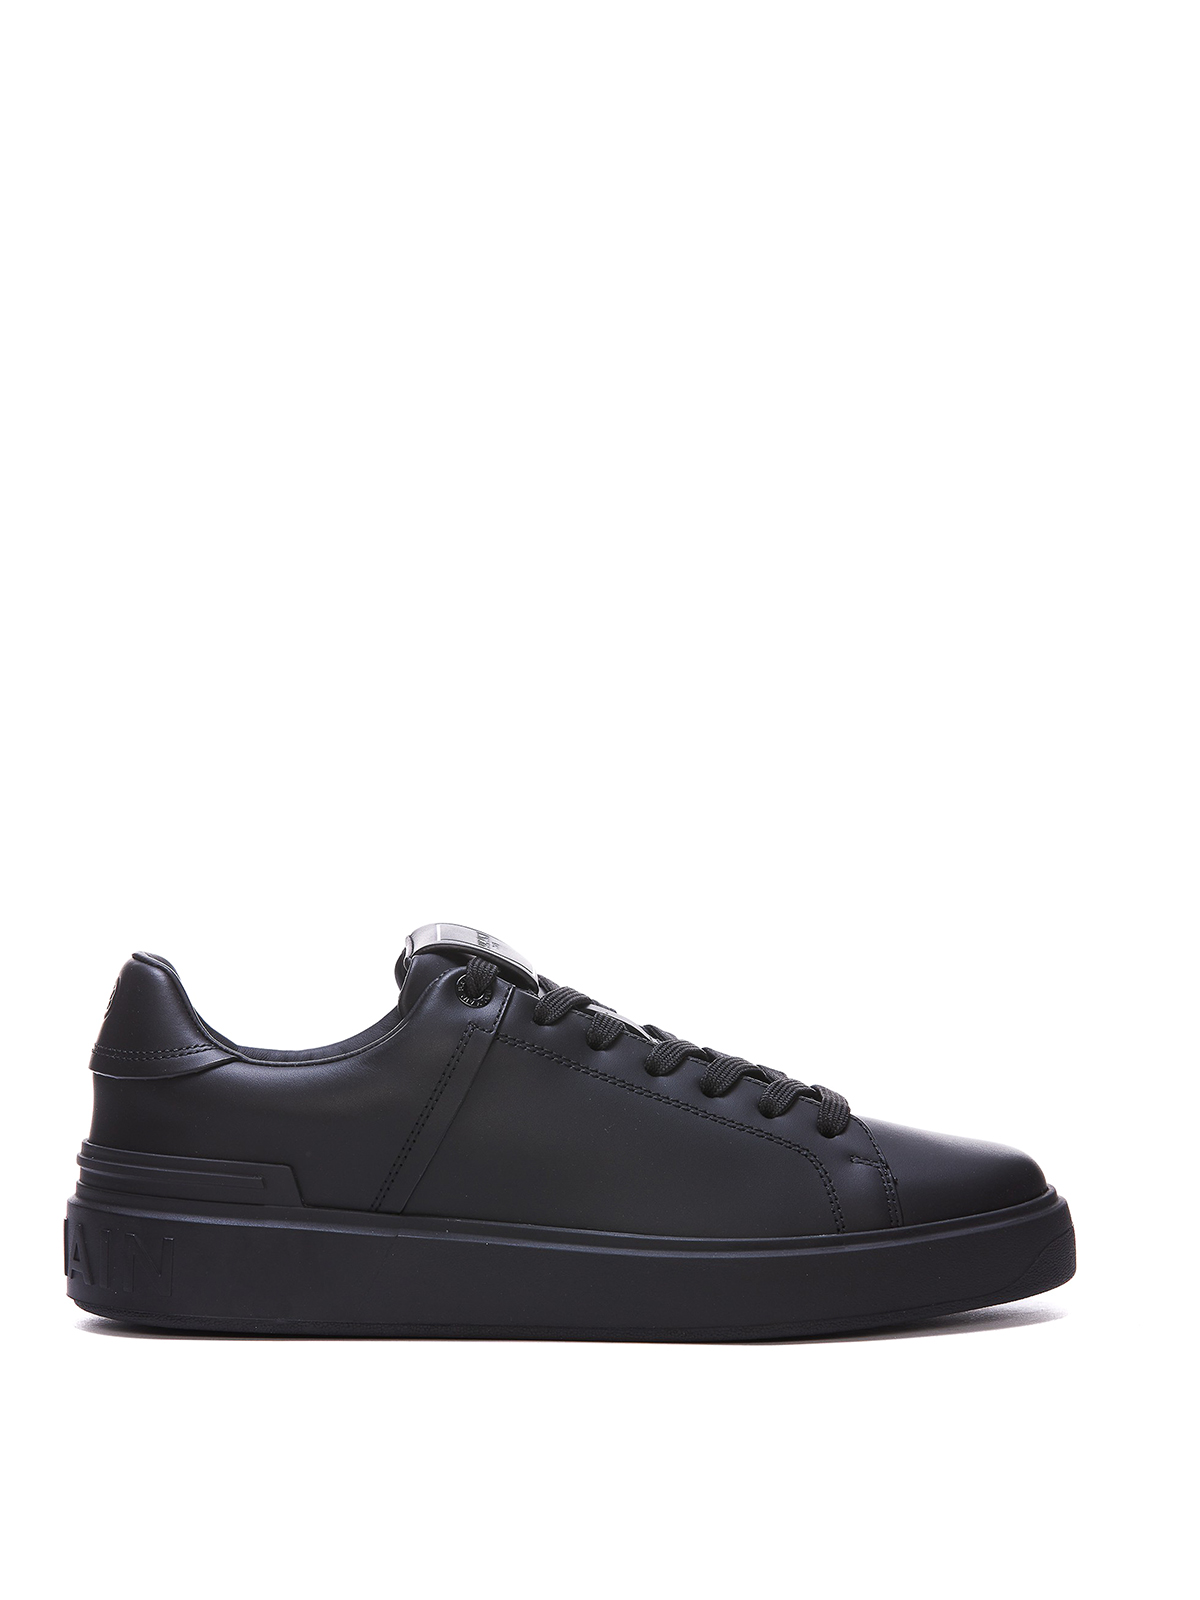 Balmain Leather Low Top Sneakers In Black